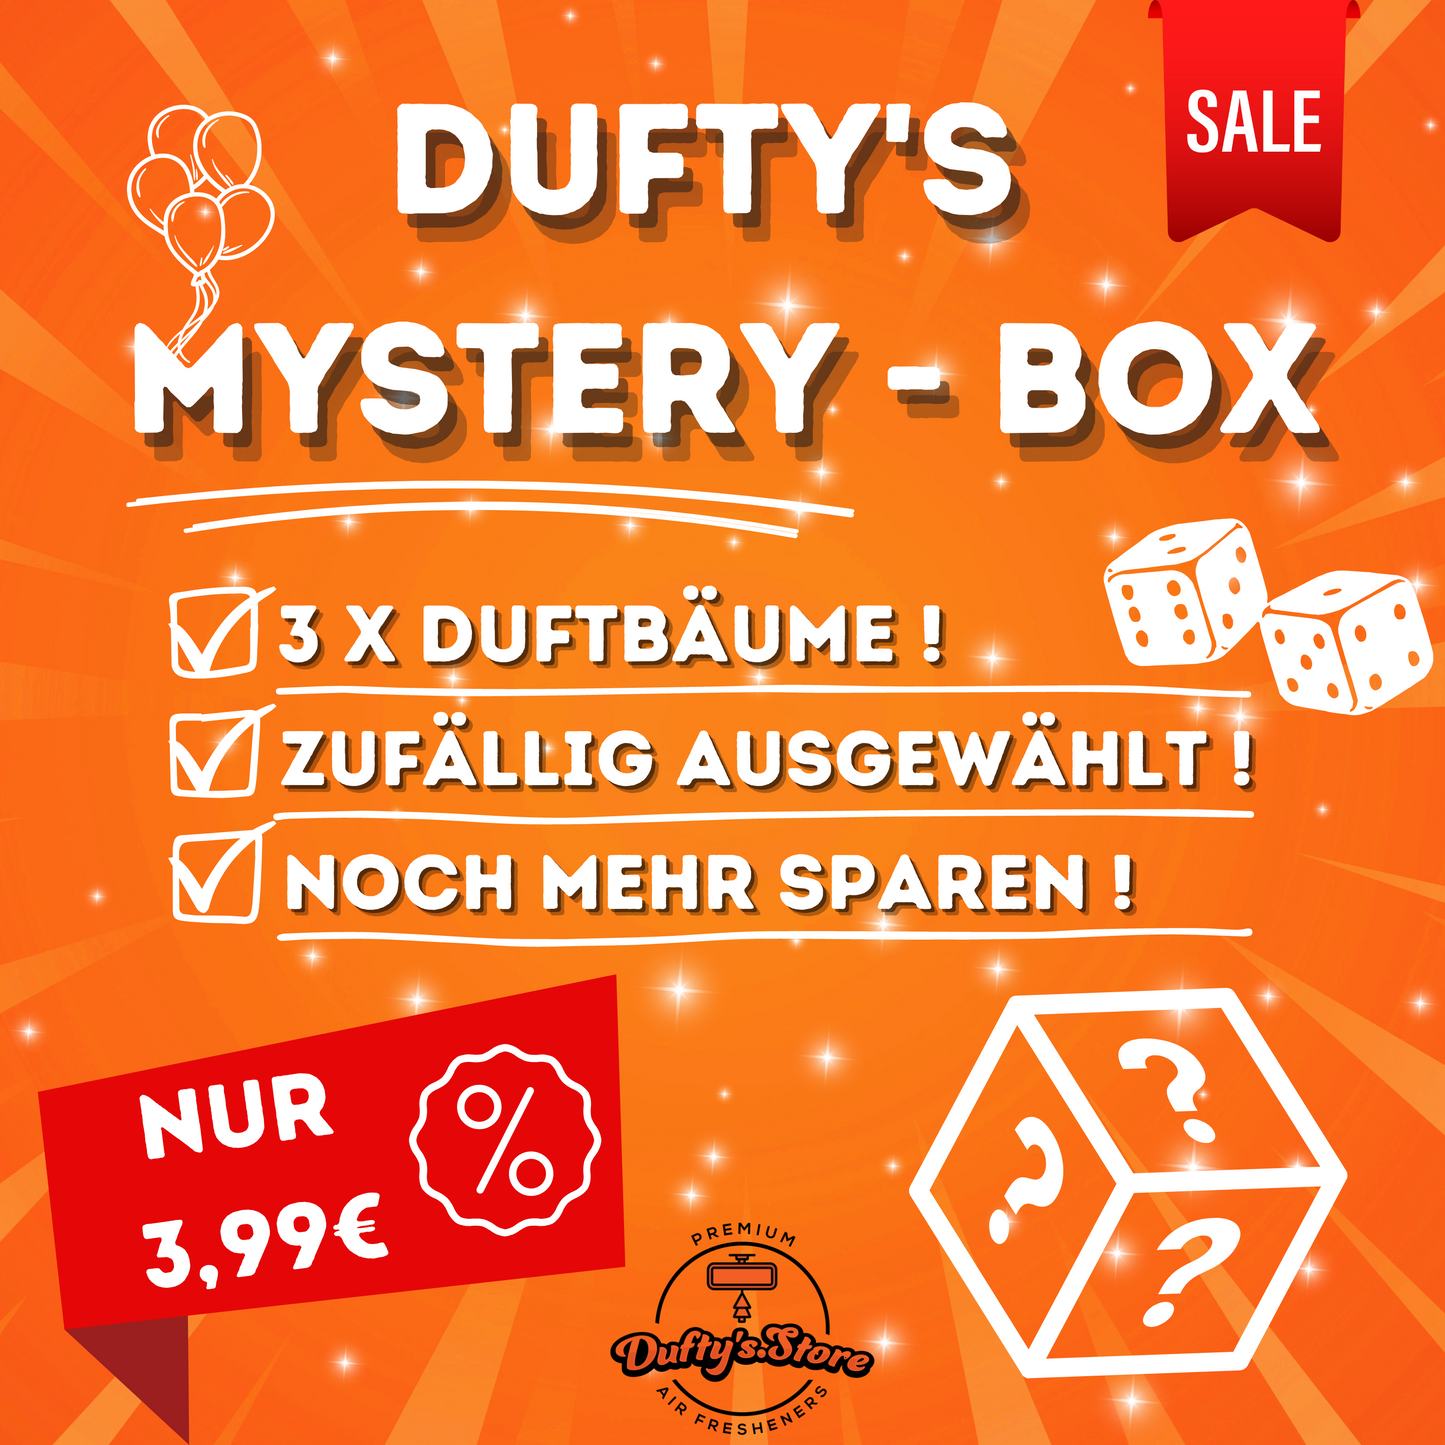 DUFTY'S MYSTERY - BOX / 3x air freshener